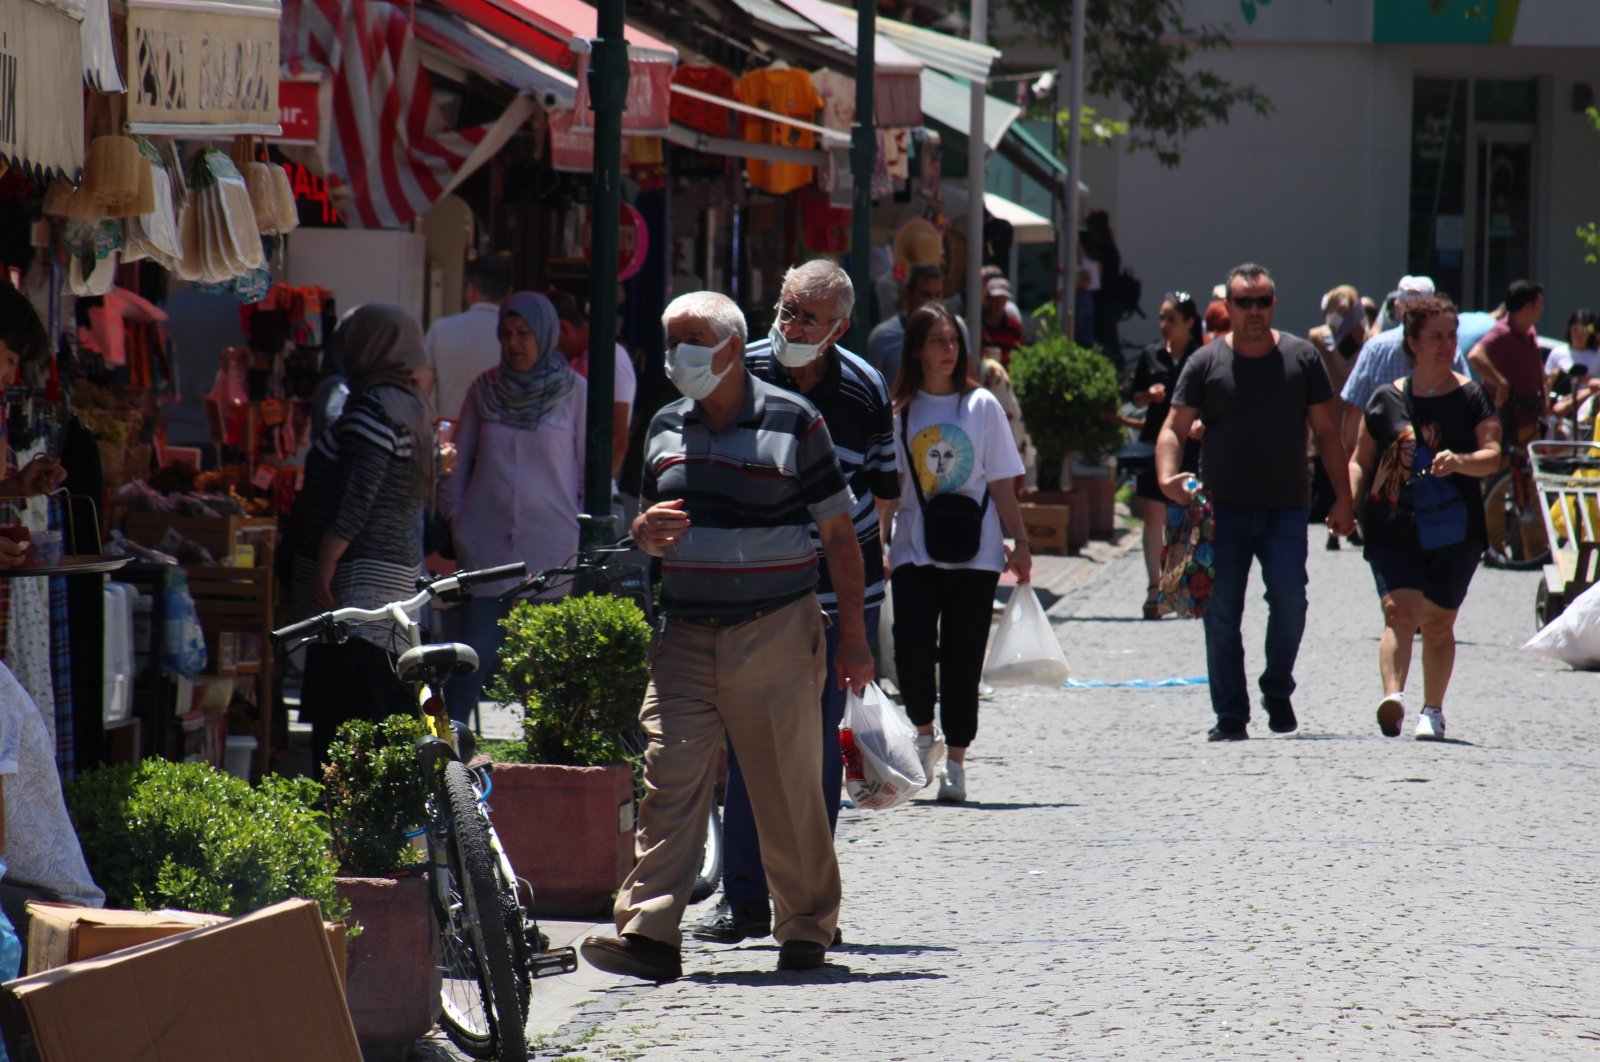 People walk on a street in Eskişehir, central Turkey, July 18, 2022. (İHA PHOTO)